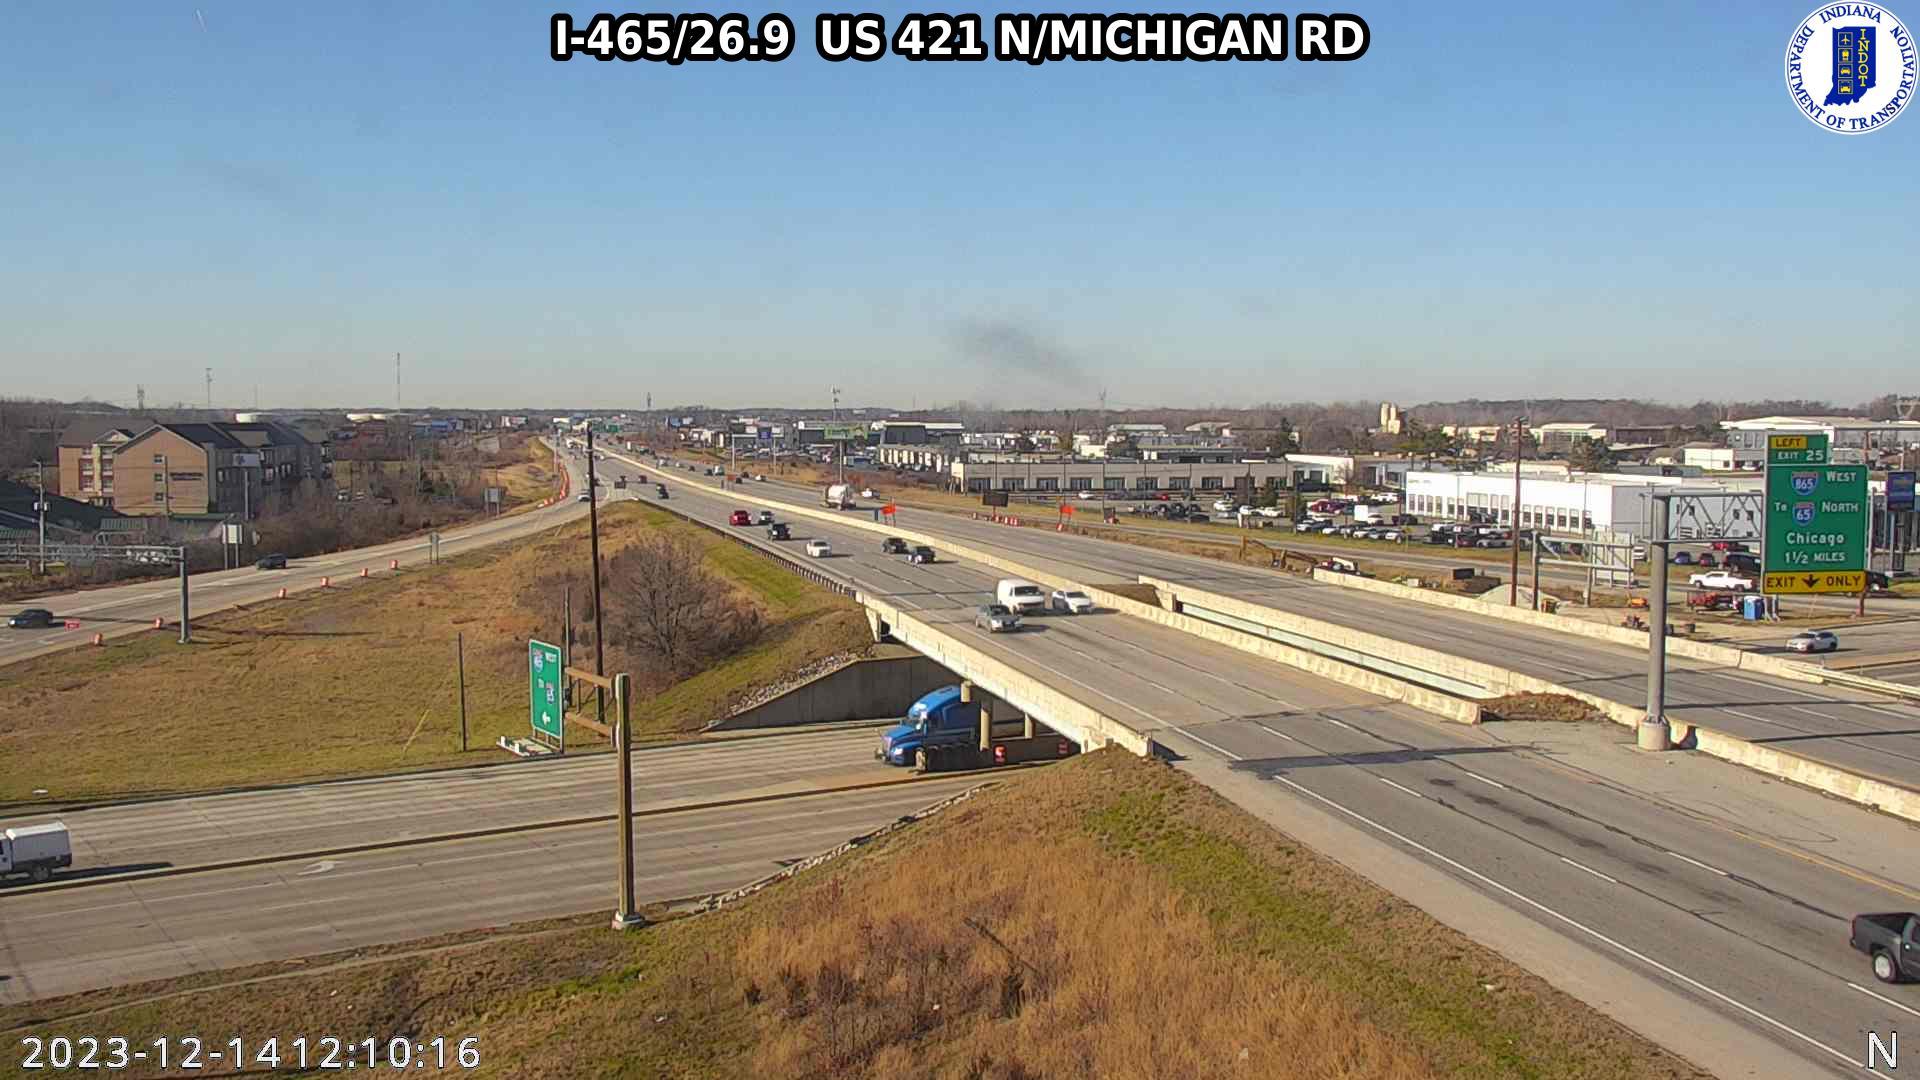 Indianapolis: I-465: I-465/26.9 US 421 N/MICHIGAN RD Traffic Camera